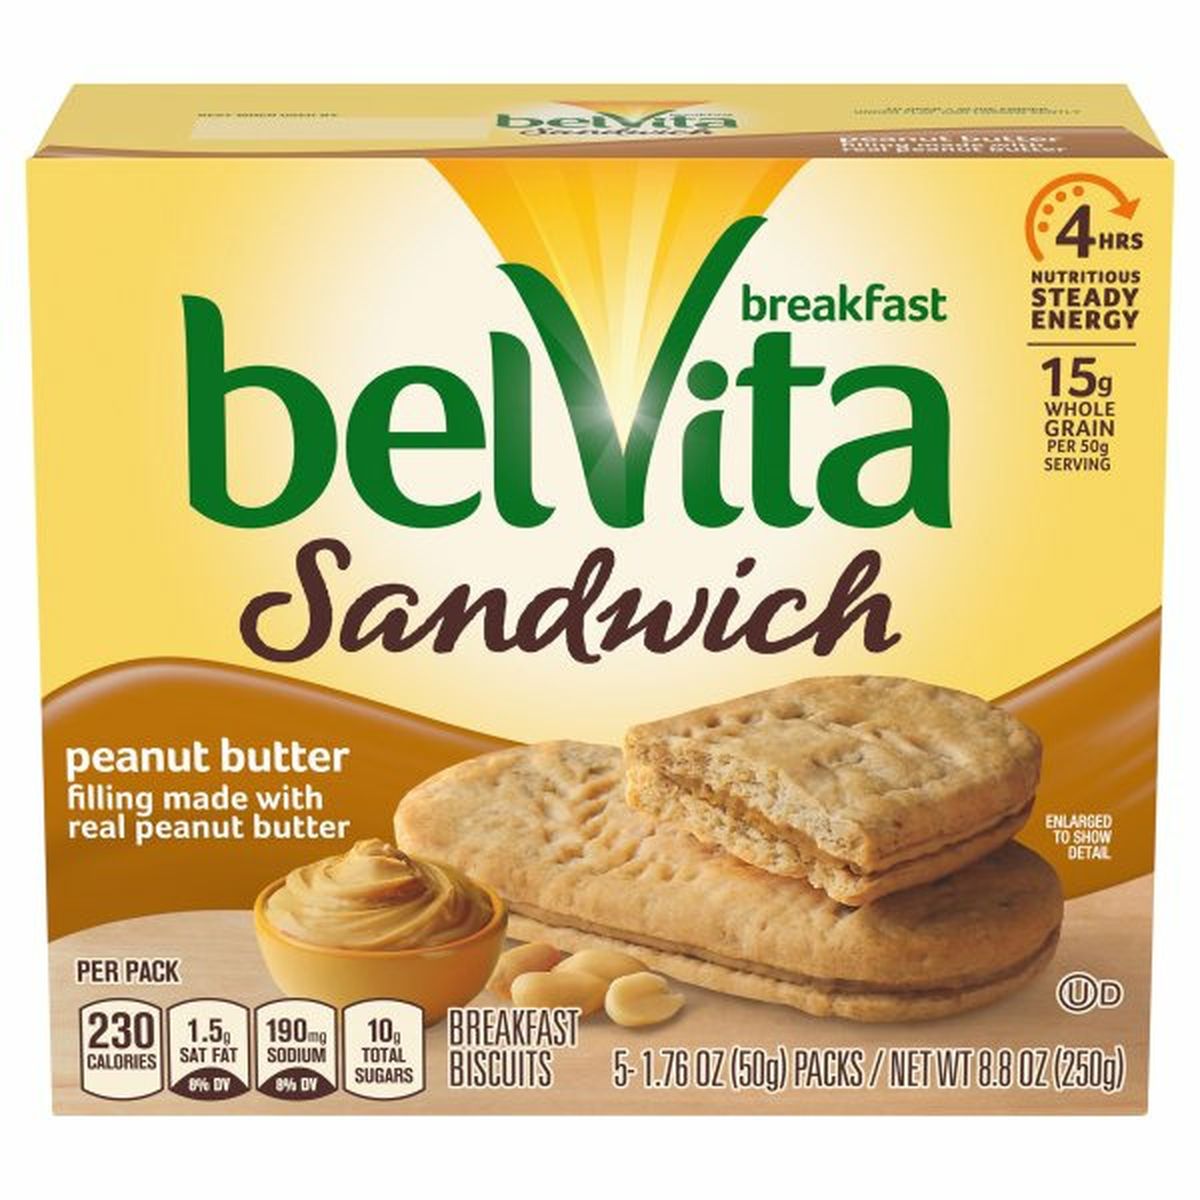 Calories in belVita Breakfast Biscuits, Sandwich, Peanut Butter